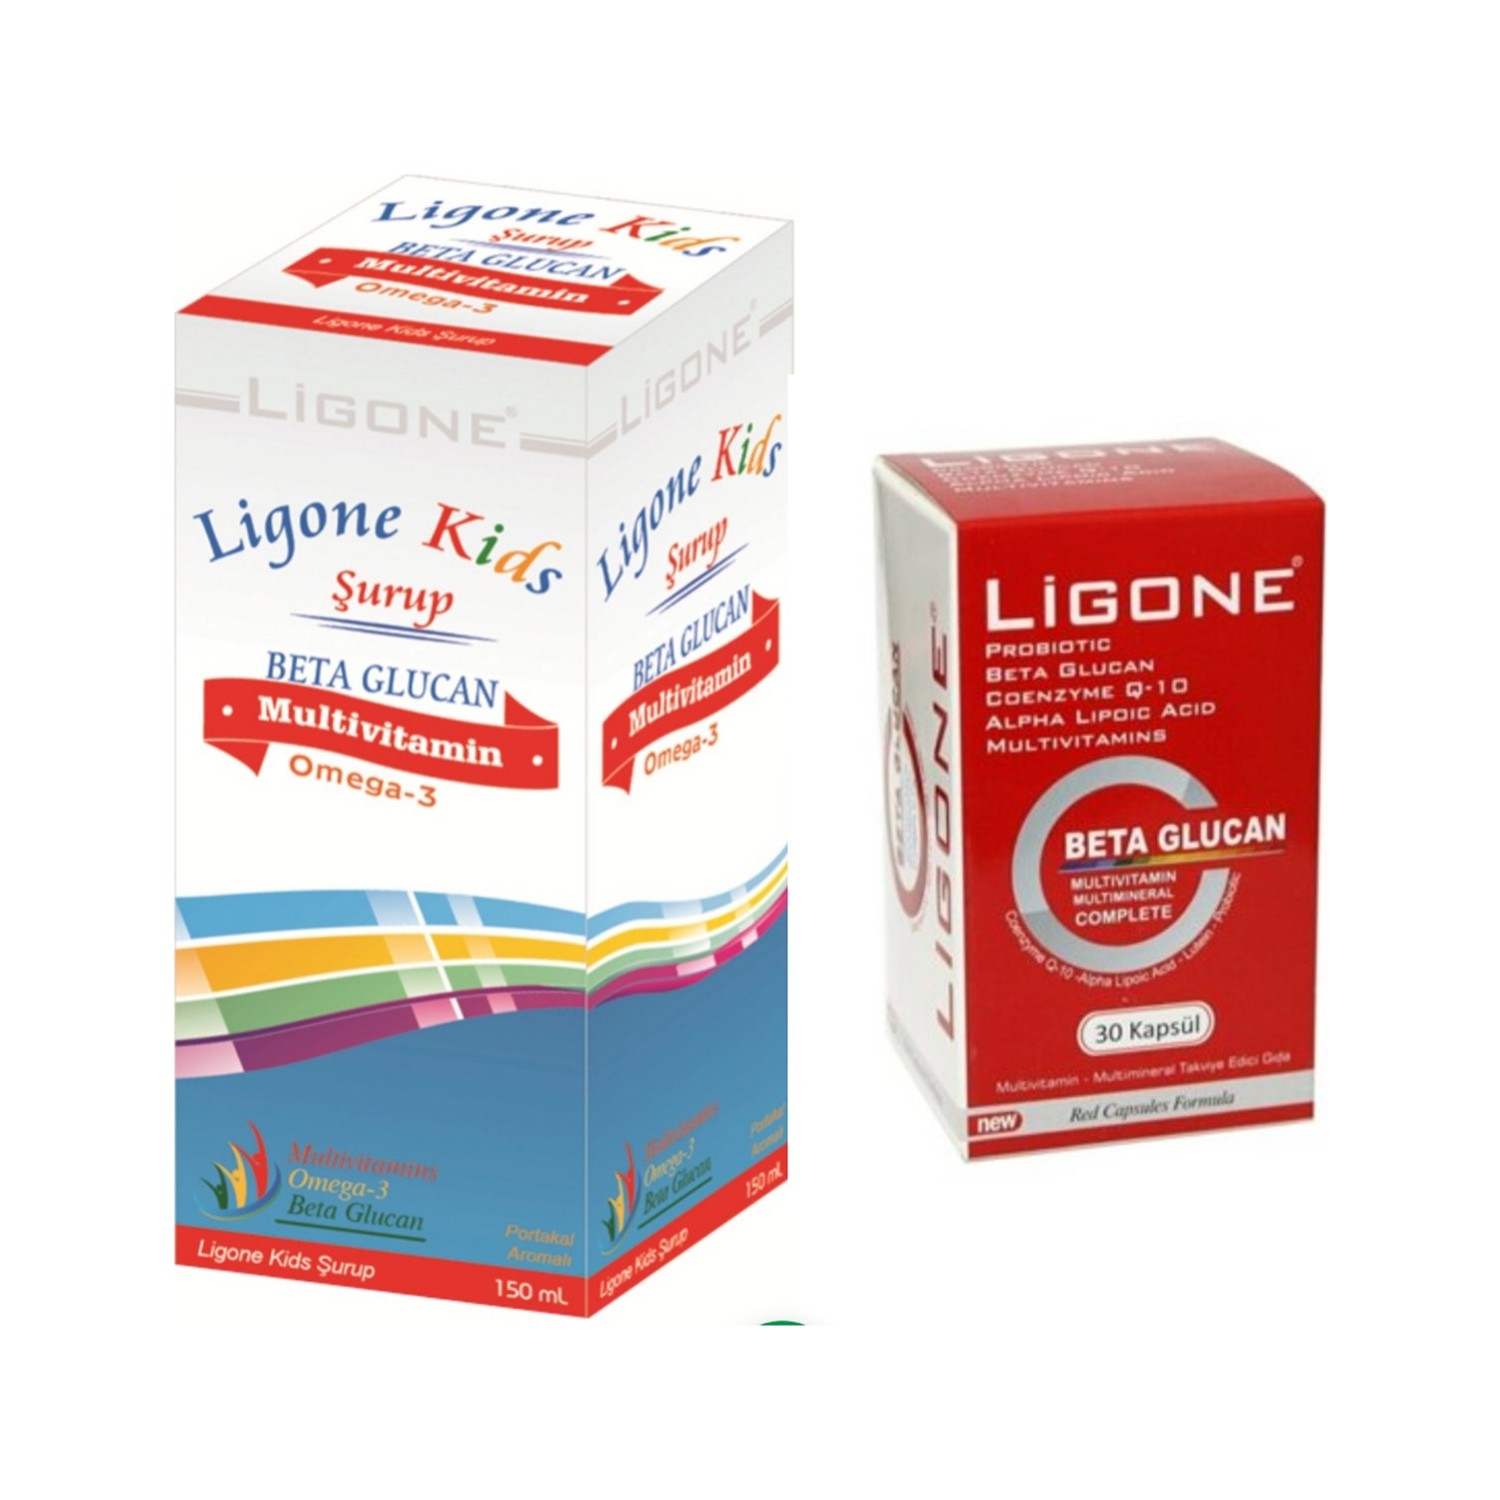 Мультивитаминный сироп Ligone Kids, 150 мл + бета глюкан Ligone, 30 капсул мультивитаминный сироп rc farma take 2 ode ligone ginseng 30 капсул